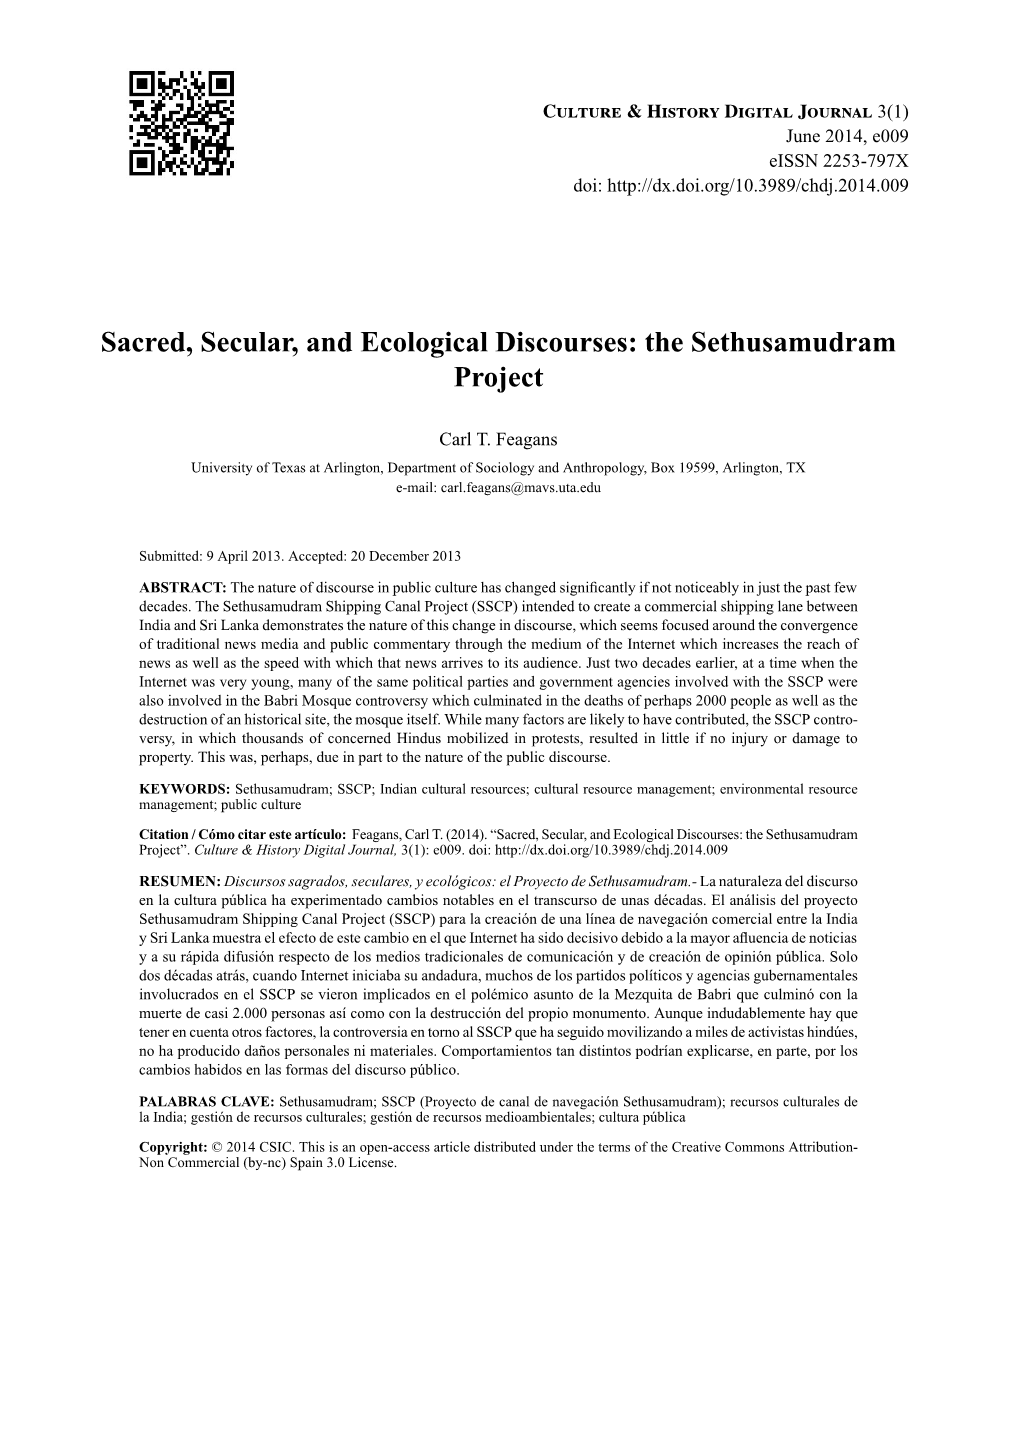 The Sethusamudram Project